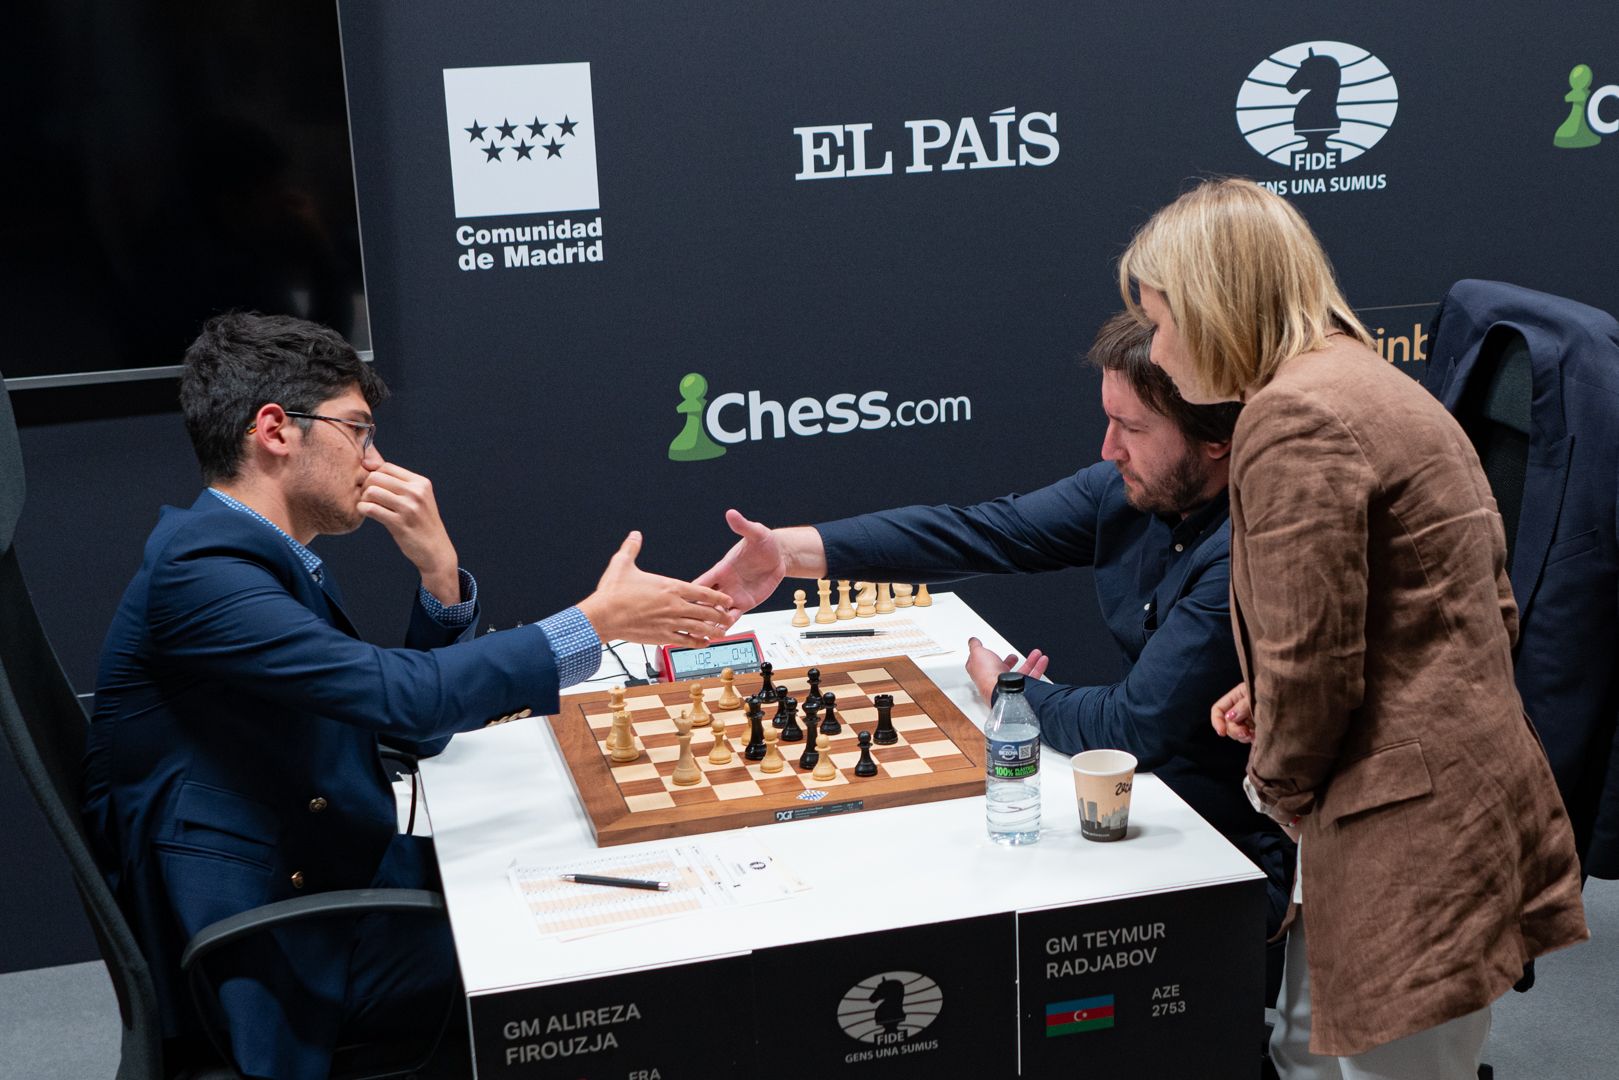 FIDE WORLD CHESS CHAMPIONSHIP MATCH 2018 – R8 REPORT – European